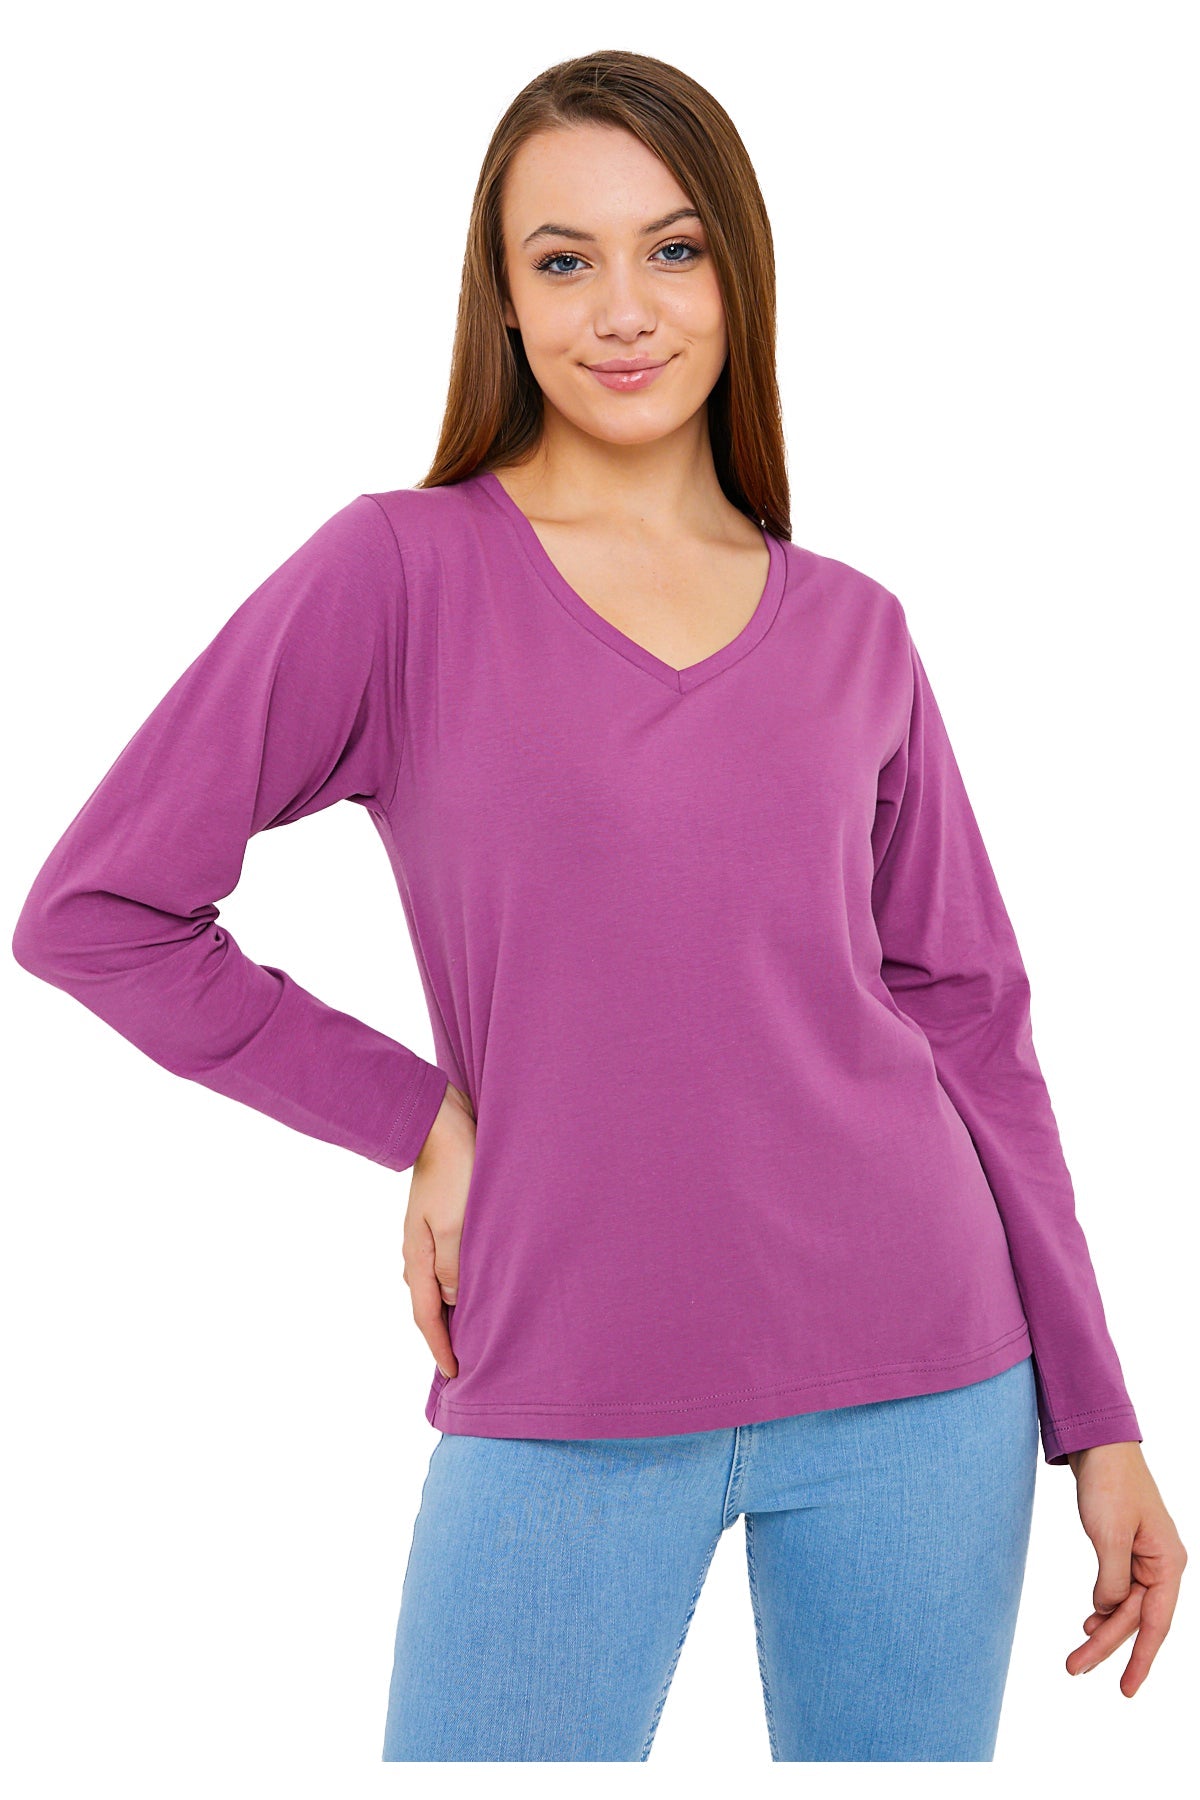 Long Sleeve V-Neck Shirts for Women & Girls - Colorful Pima Cotton-82